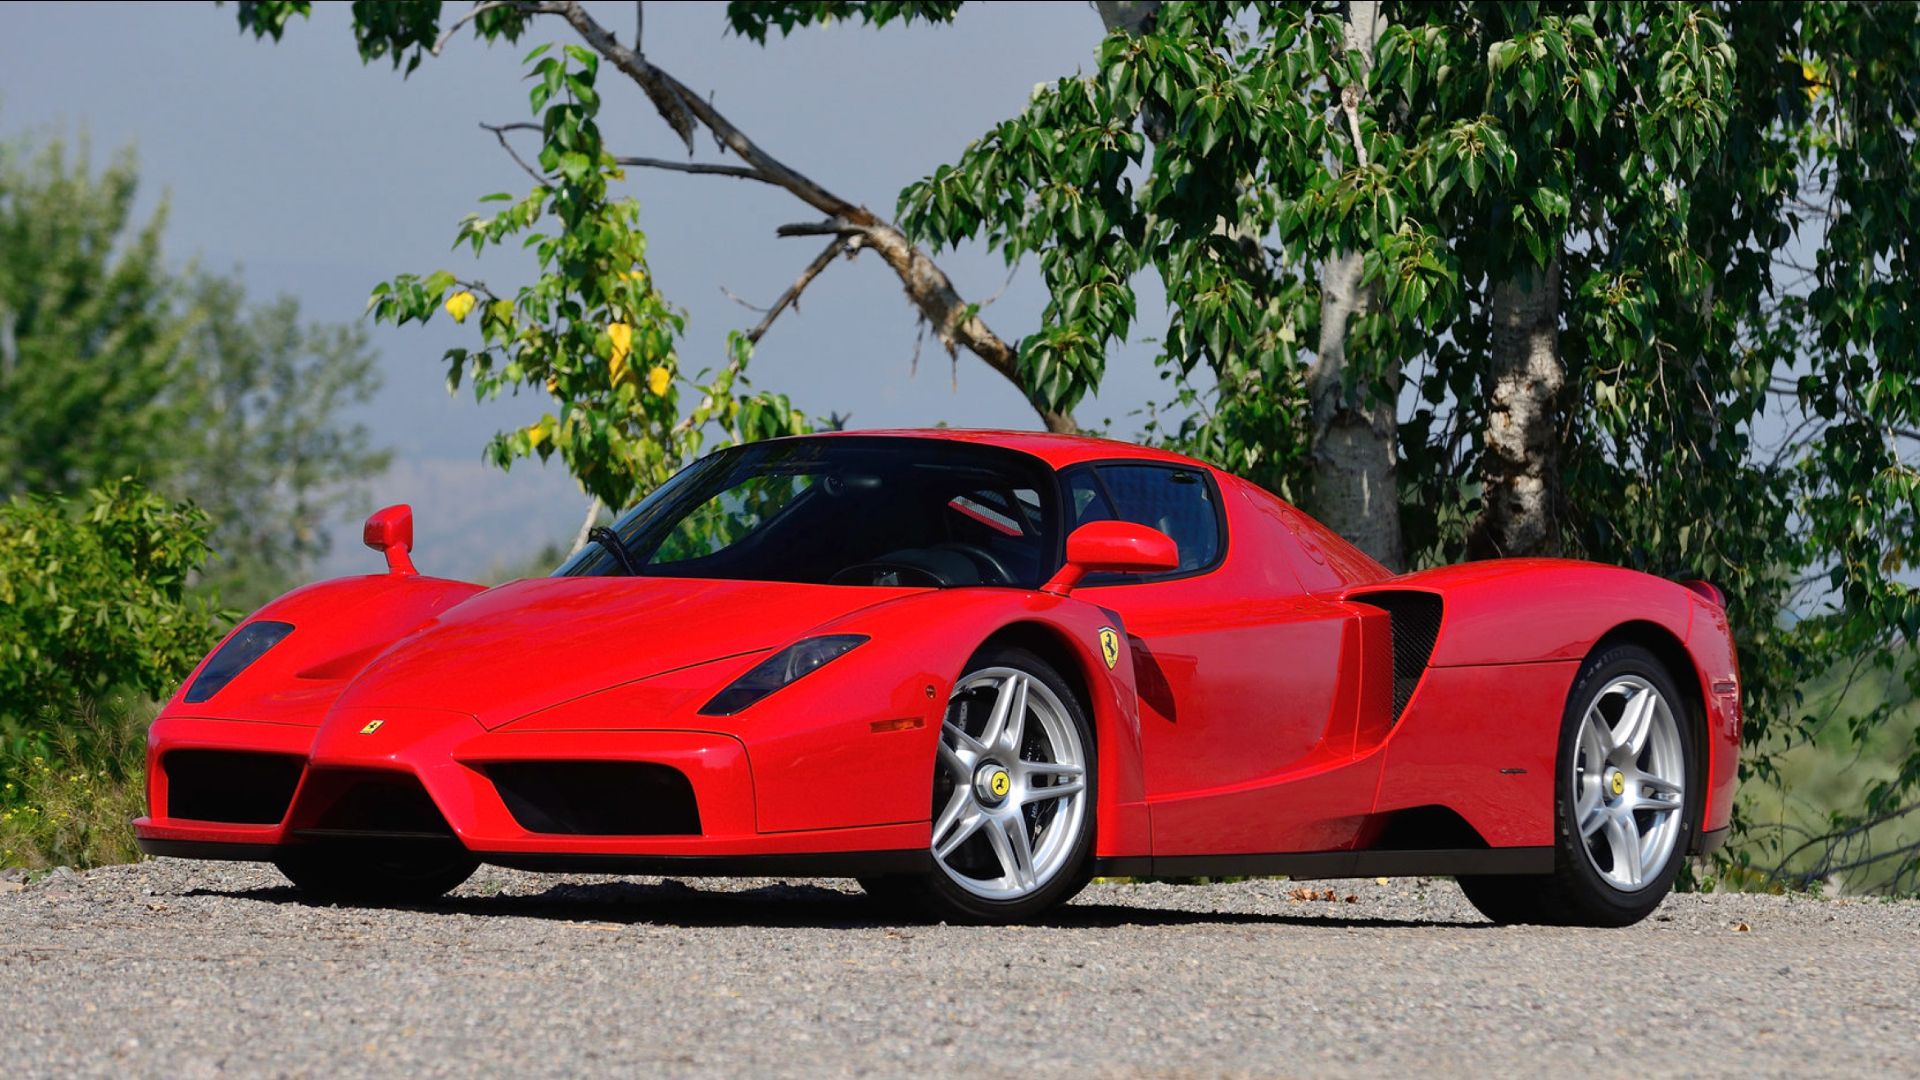 Red Ferrari Enzo